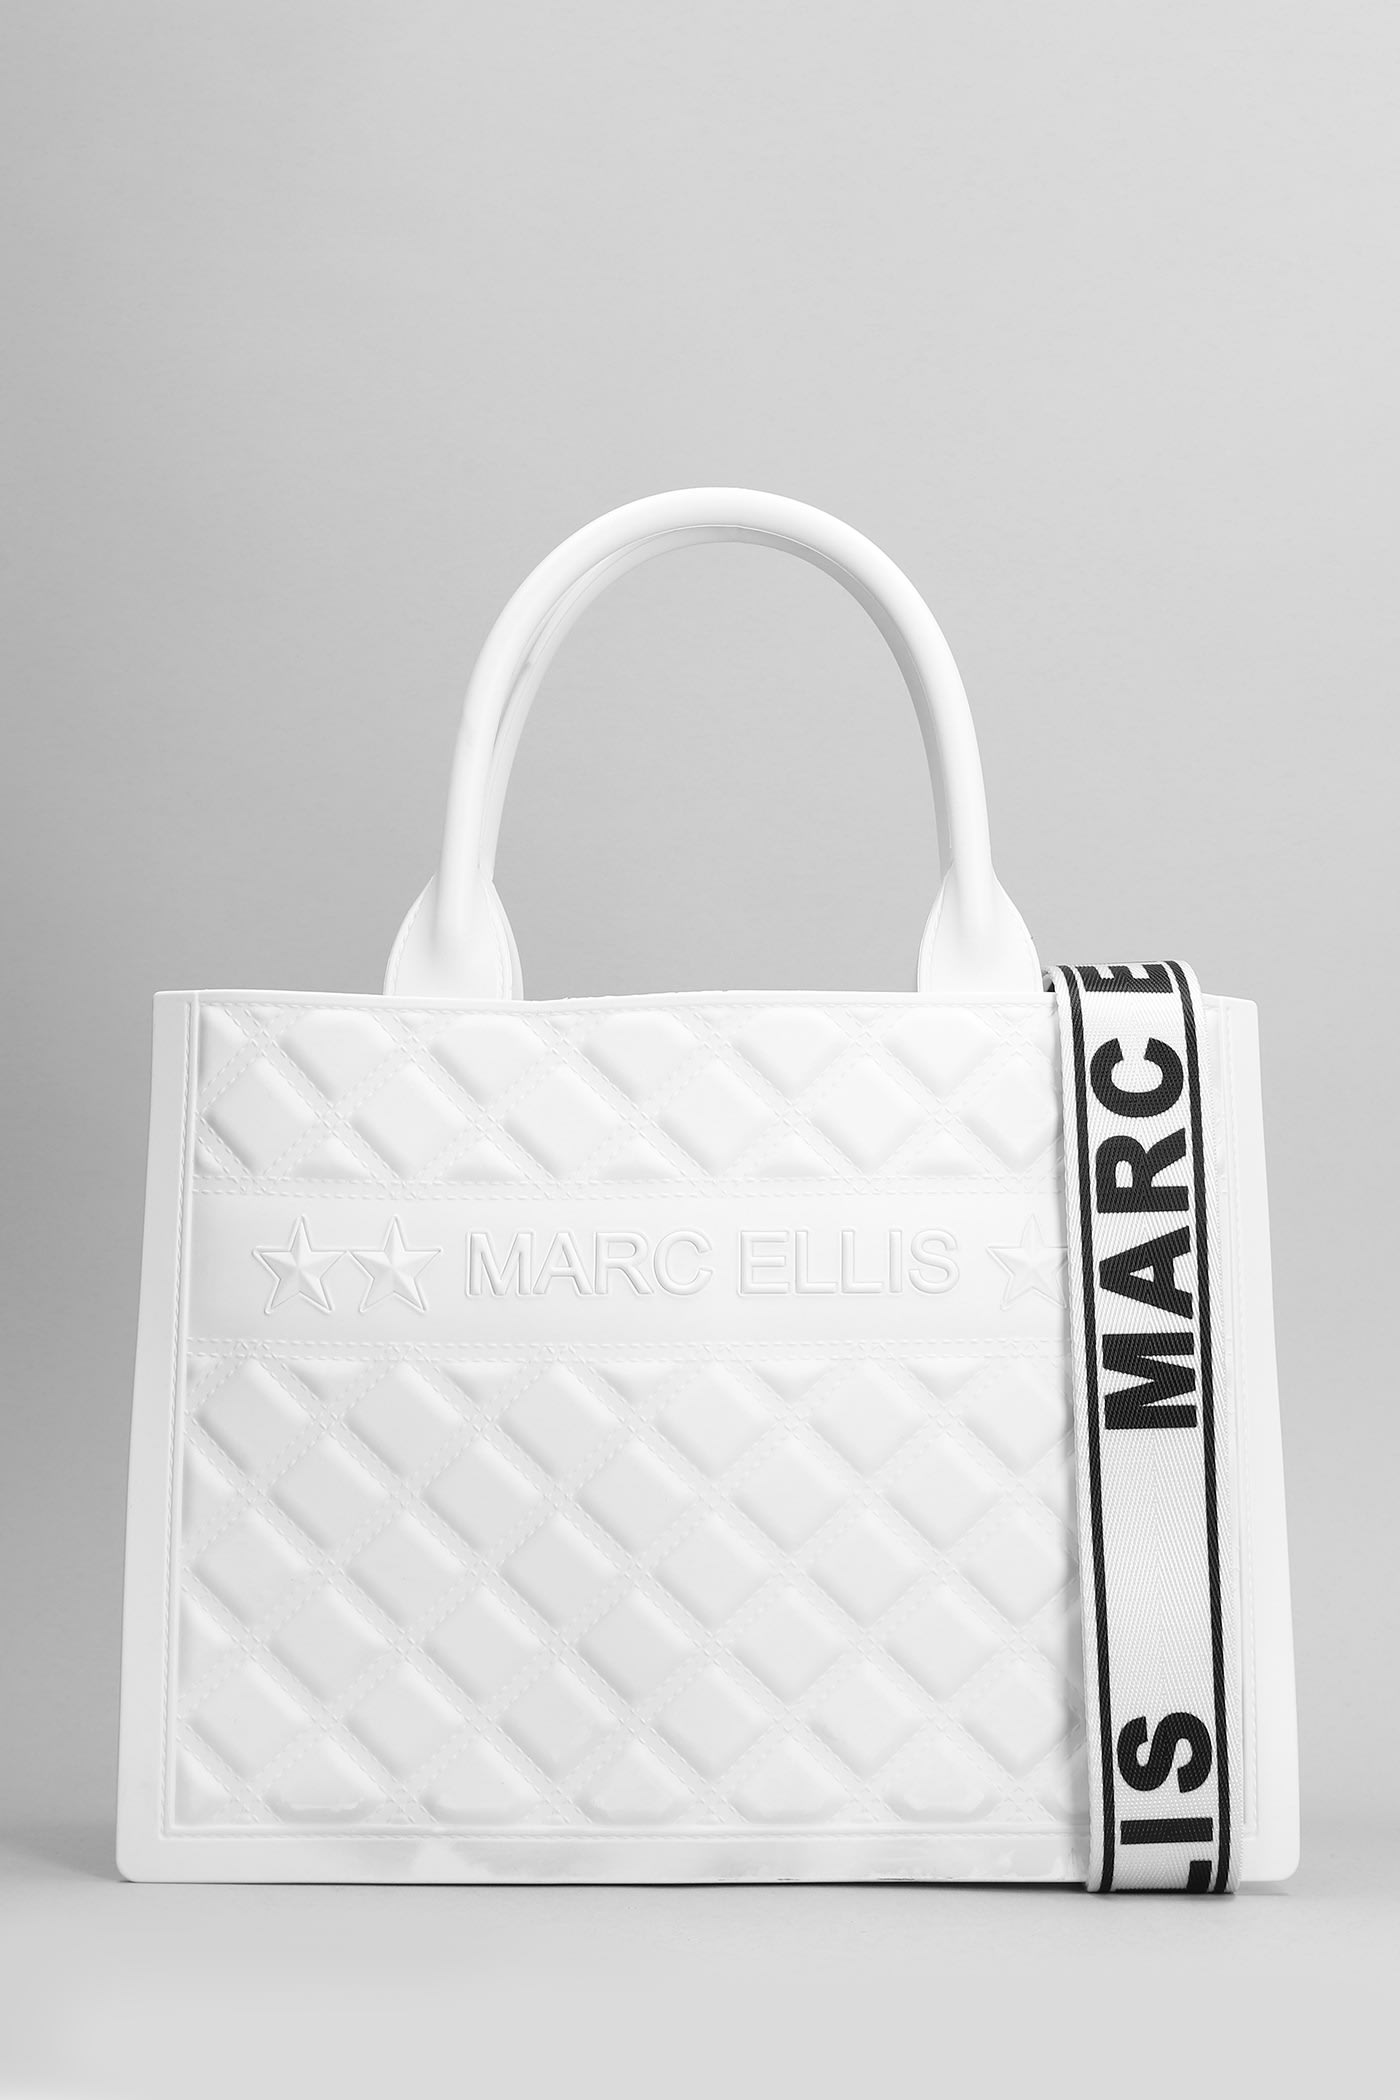 Marc Ellis Flat Buby M Hand Bag In White Pvc